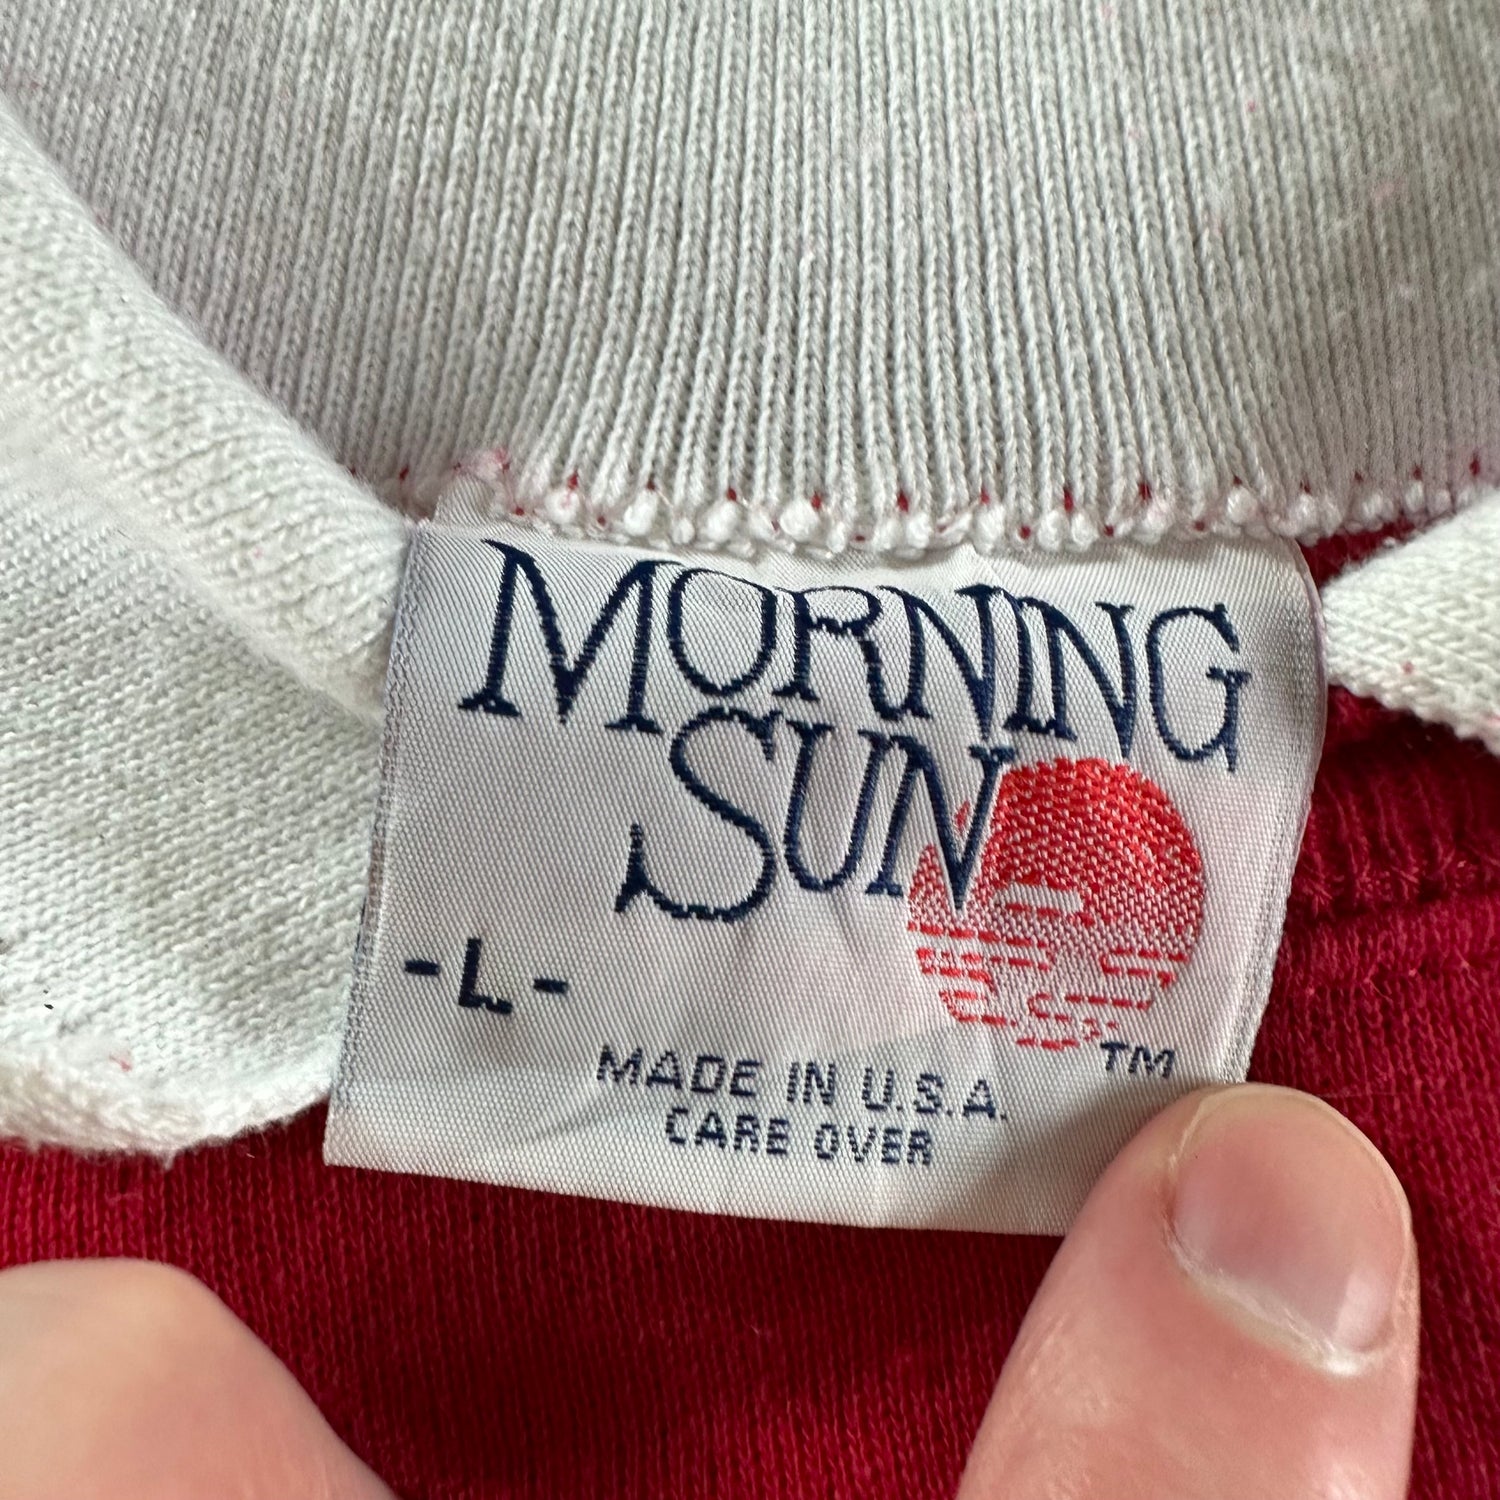 Vintage 1990s Morning Sun Sweatshirt size Large